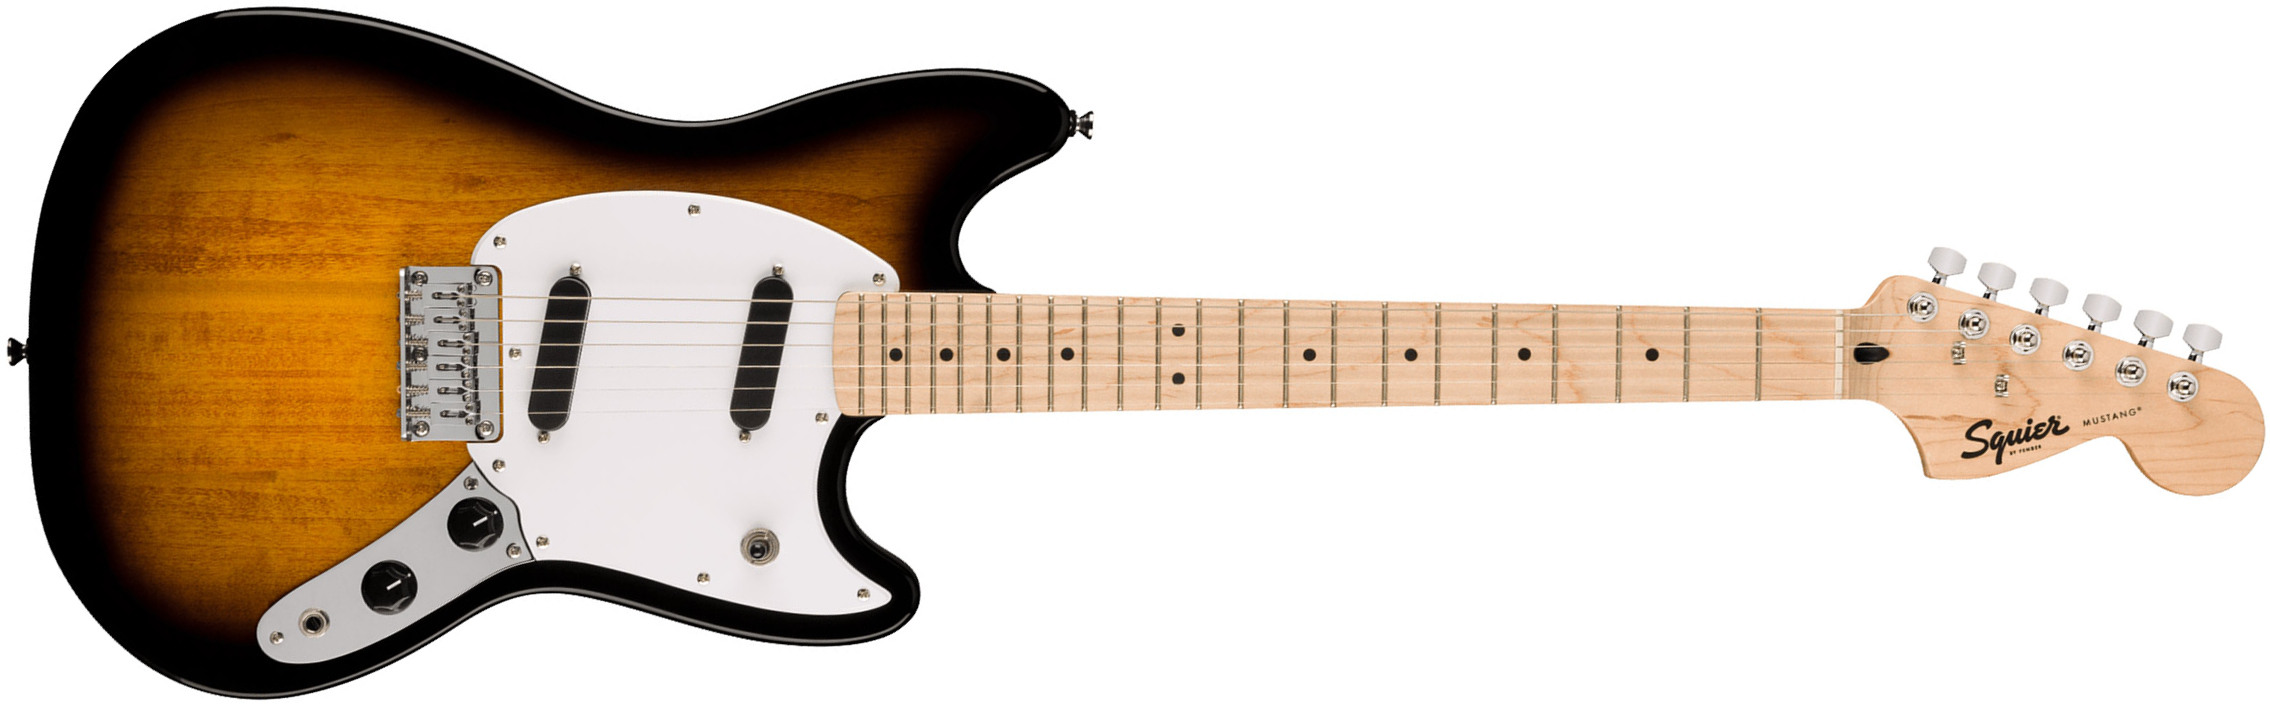 Squier Mustang Sonic 2s Ht Mn - 2-color Sunburst - Retro rock electric guitar - Main picture